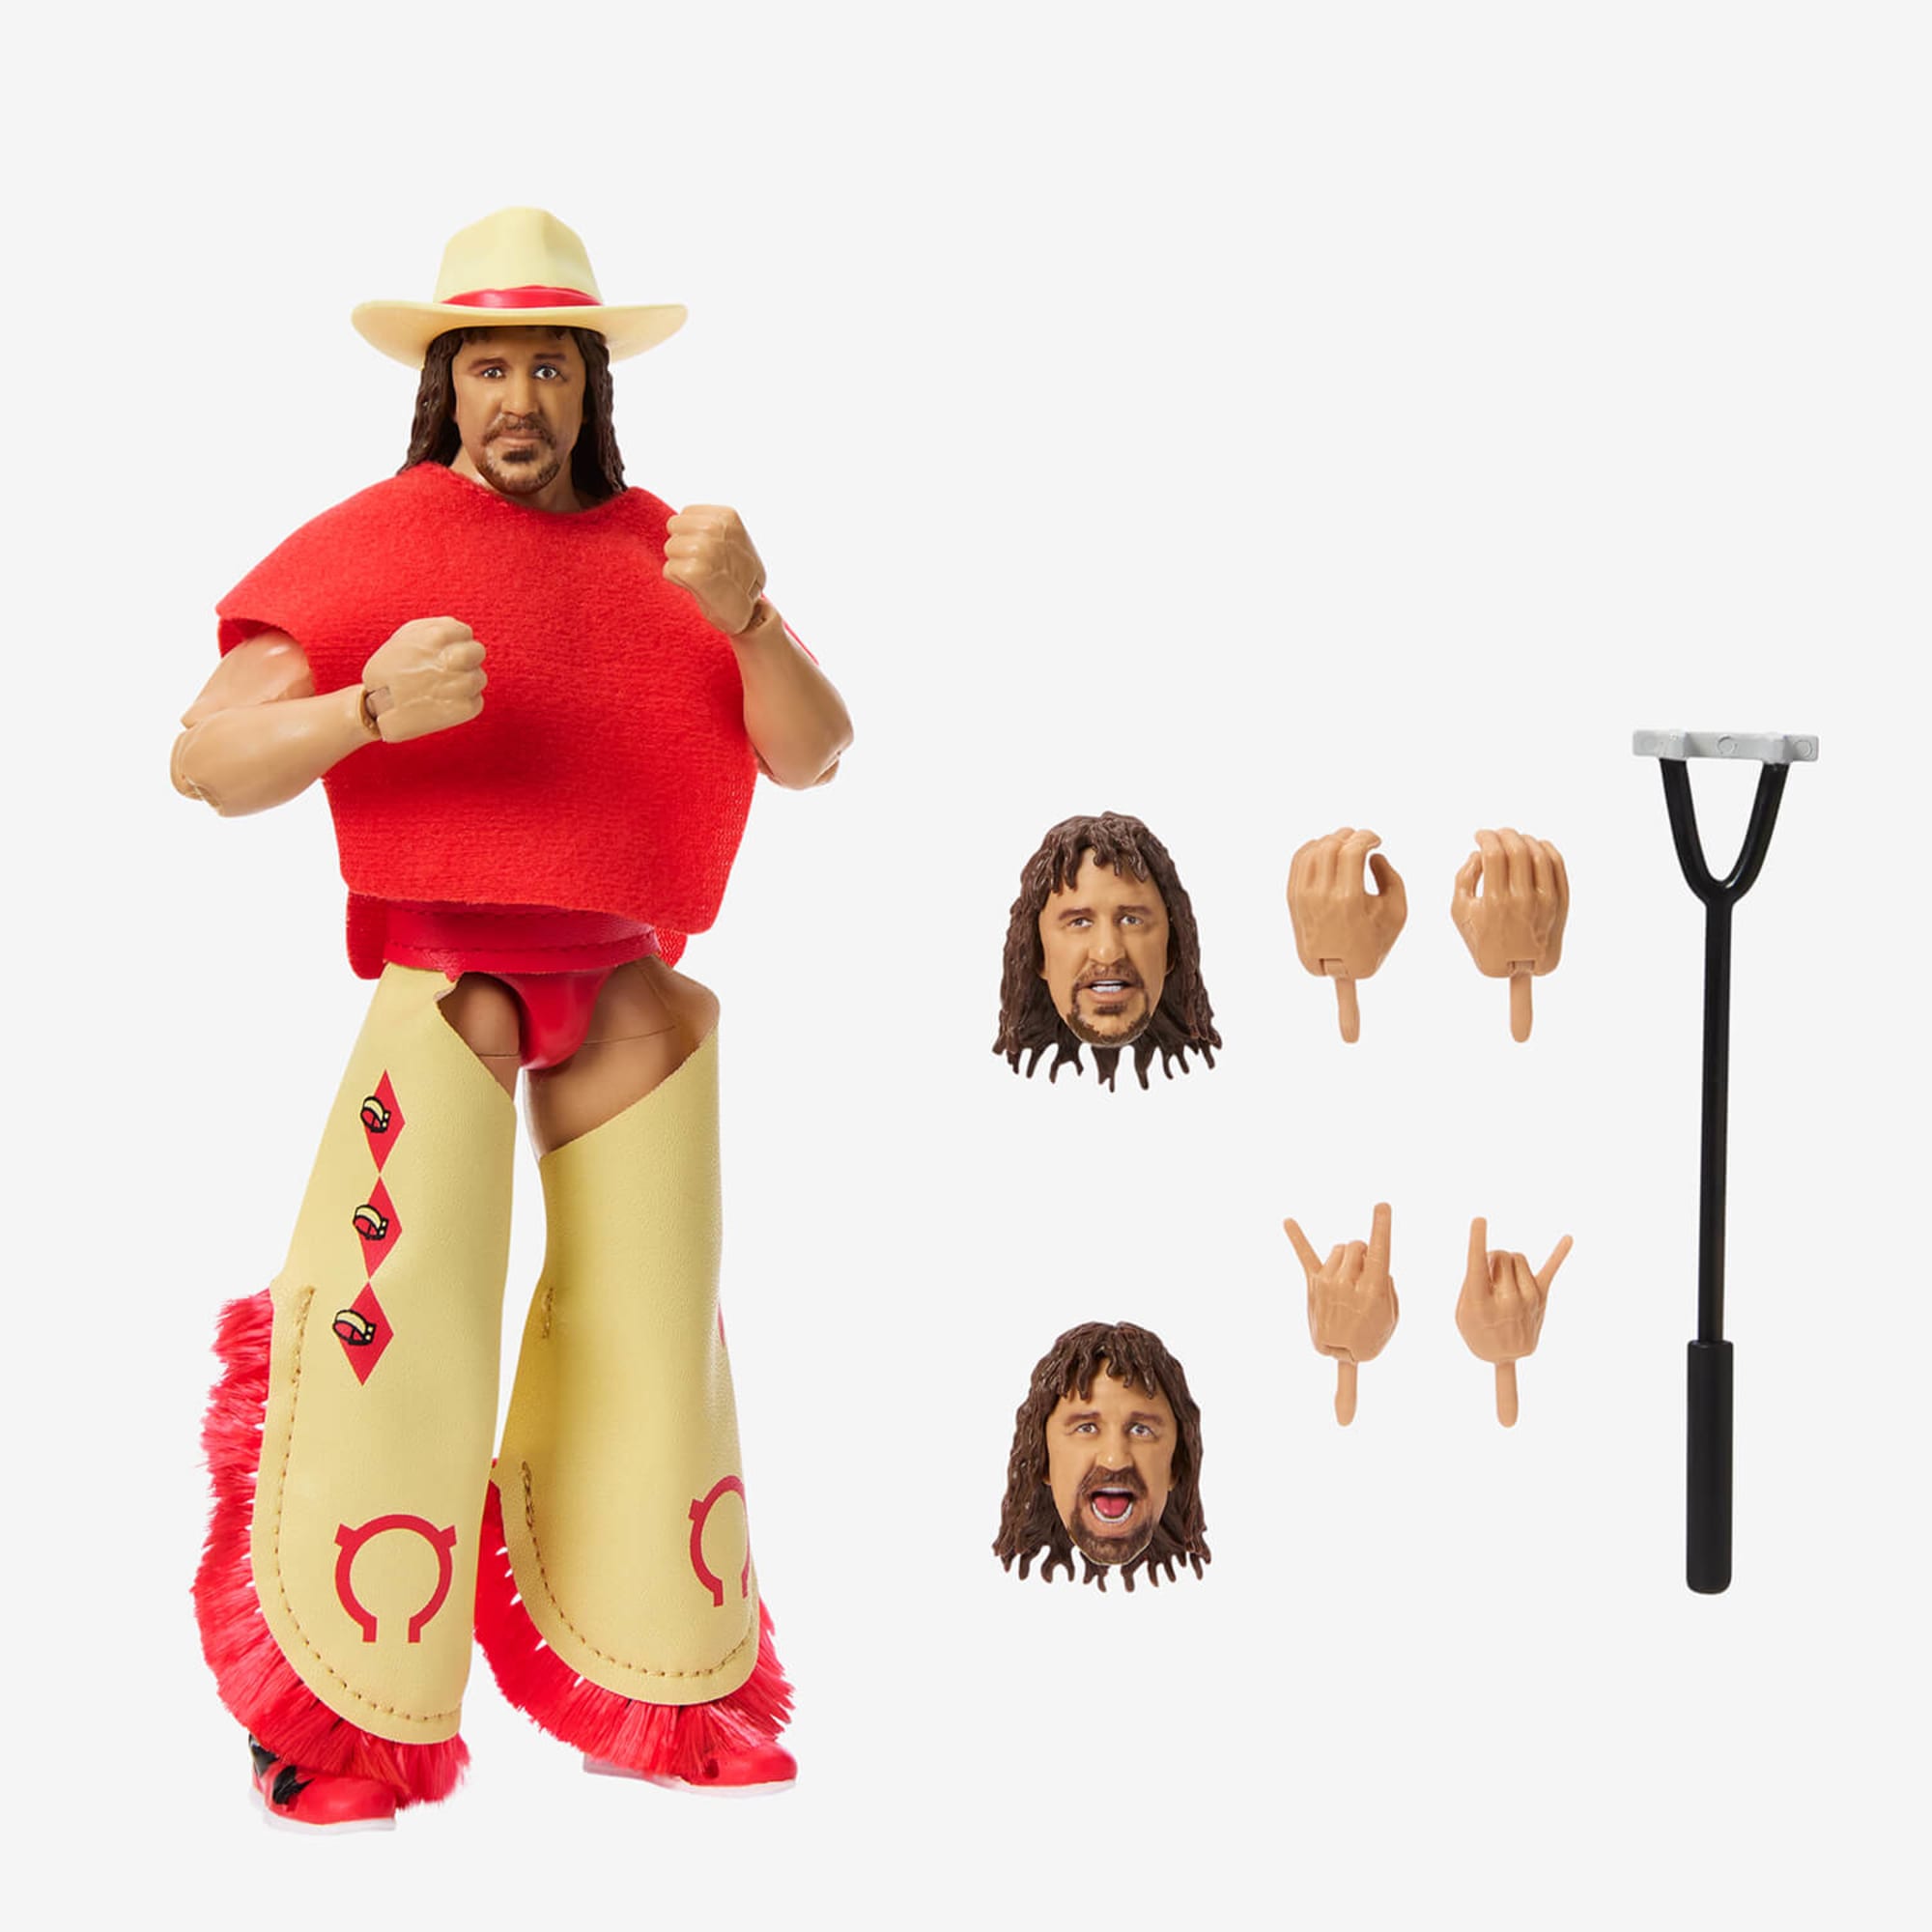 WWE Coliseum Collection Hulk Hogan & Terry Funk Ultimate Edition Figur –  Mattel Creations